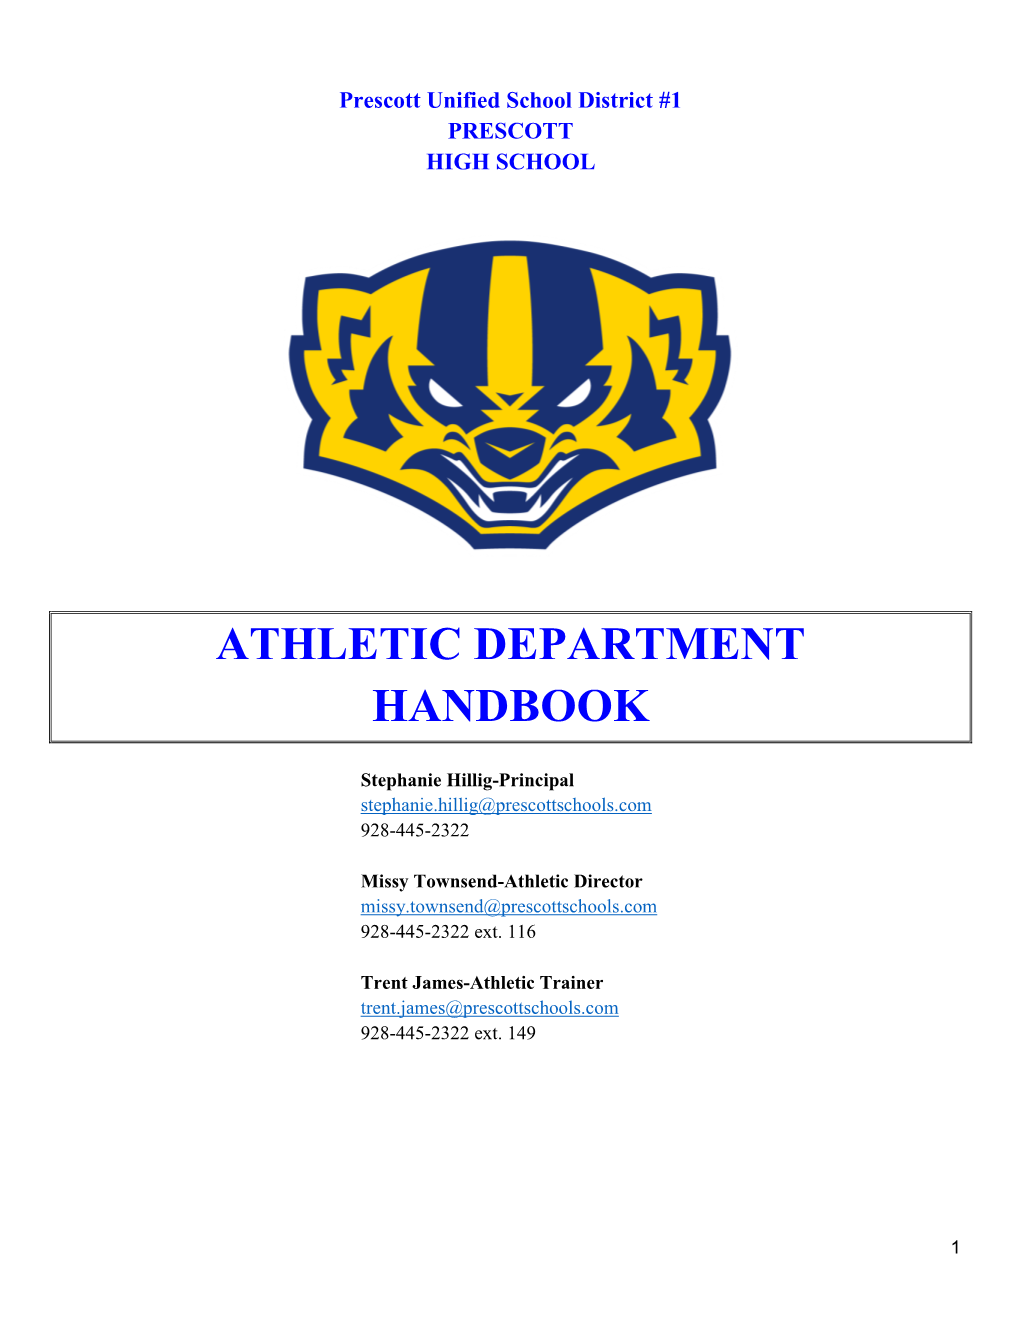 Athletic Department Handbook